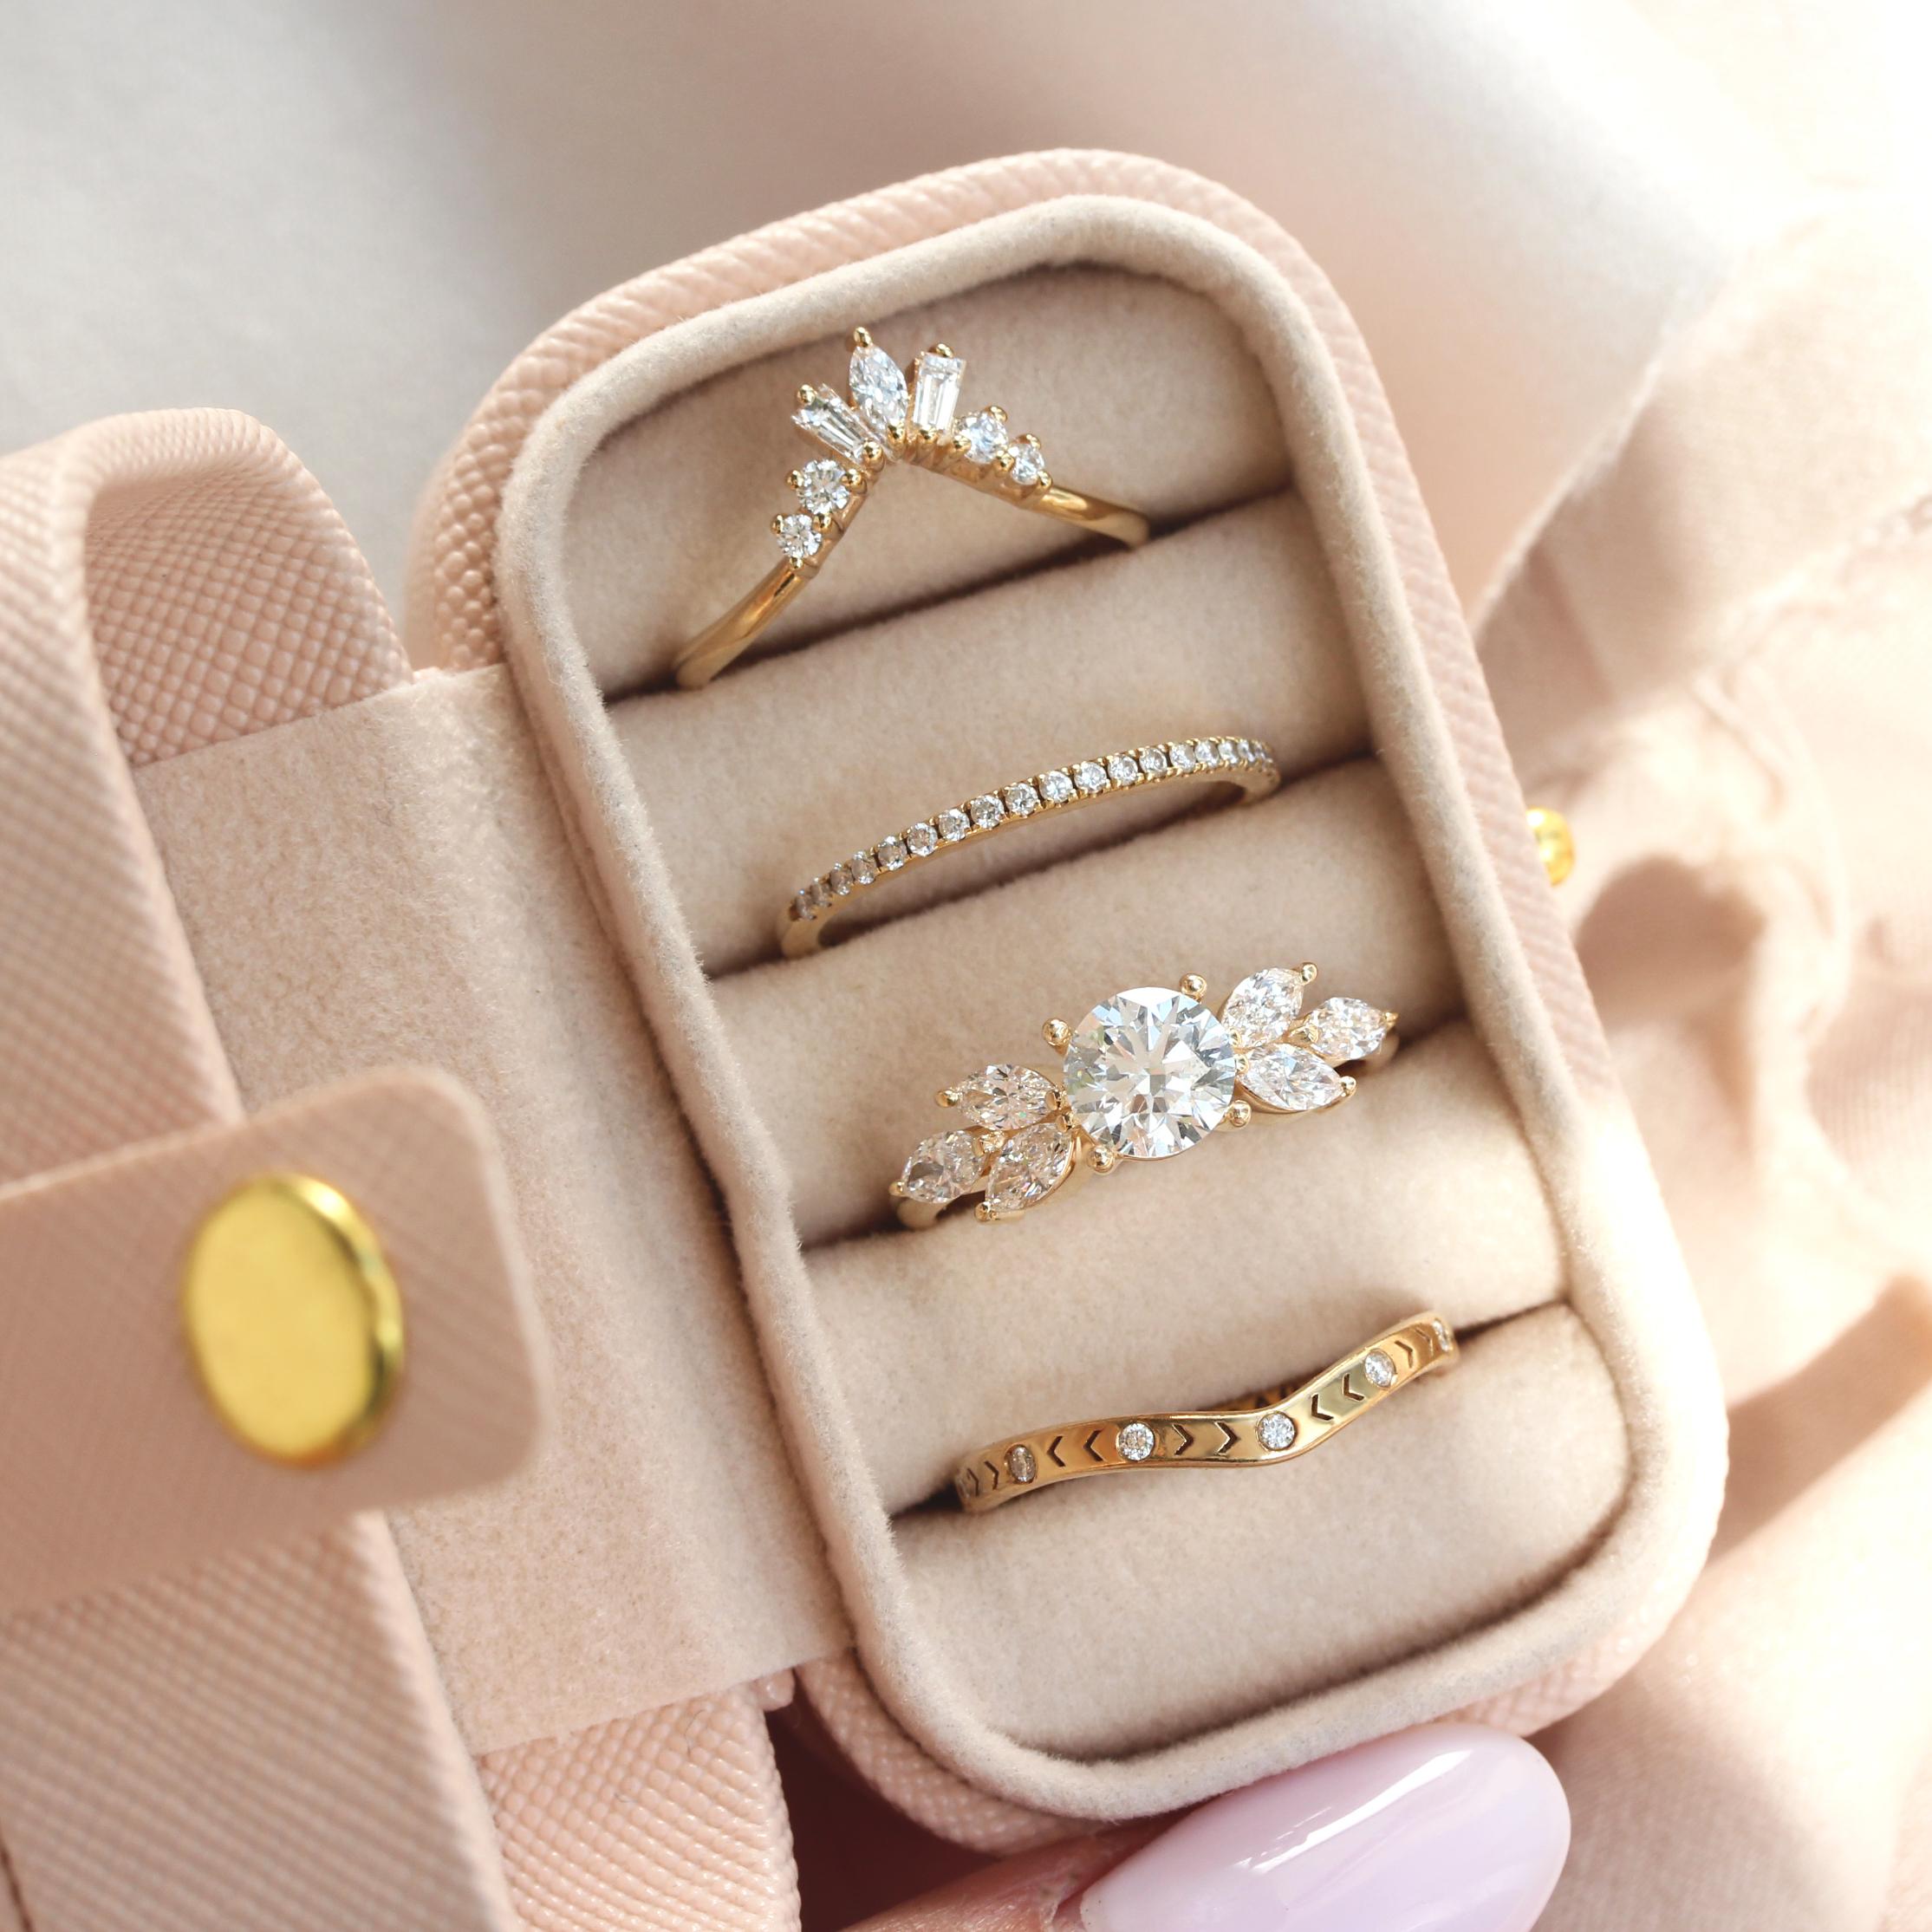 0.8 carat marquise diamond ring